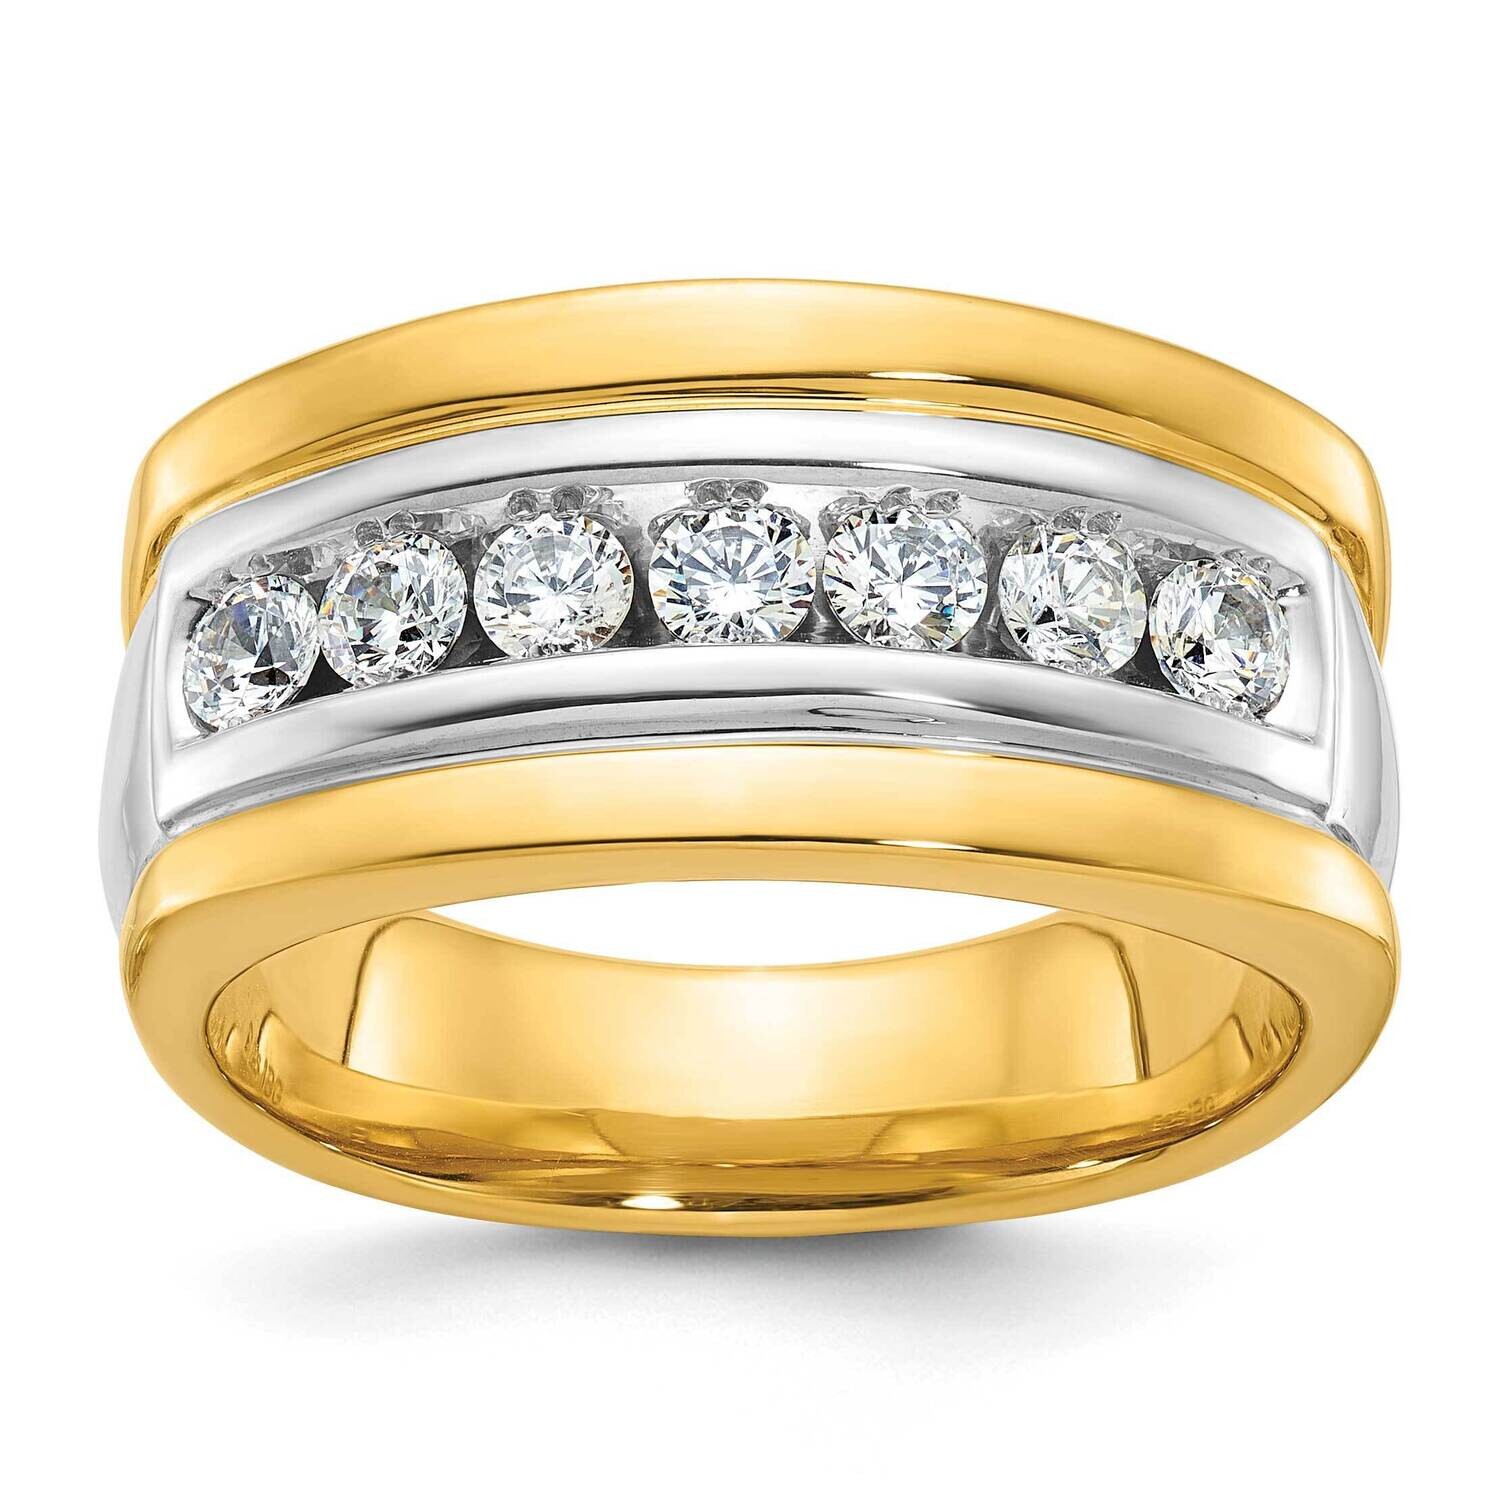 Ibgoodman Men's Polished Grooved 7-Stone 3/4 Carat Aa Quality Diamond Ring 14k Two-Tone Gold B58002-4YWAA